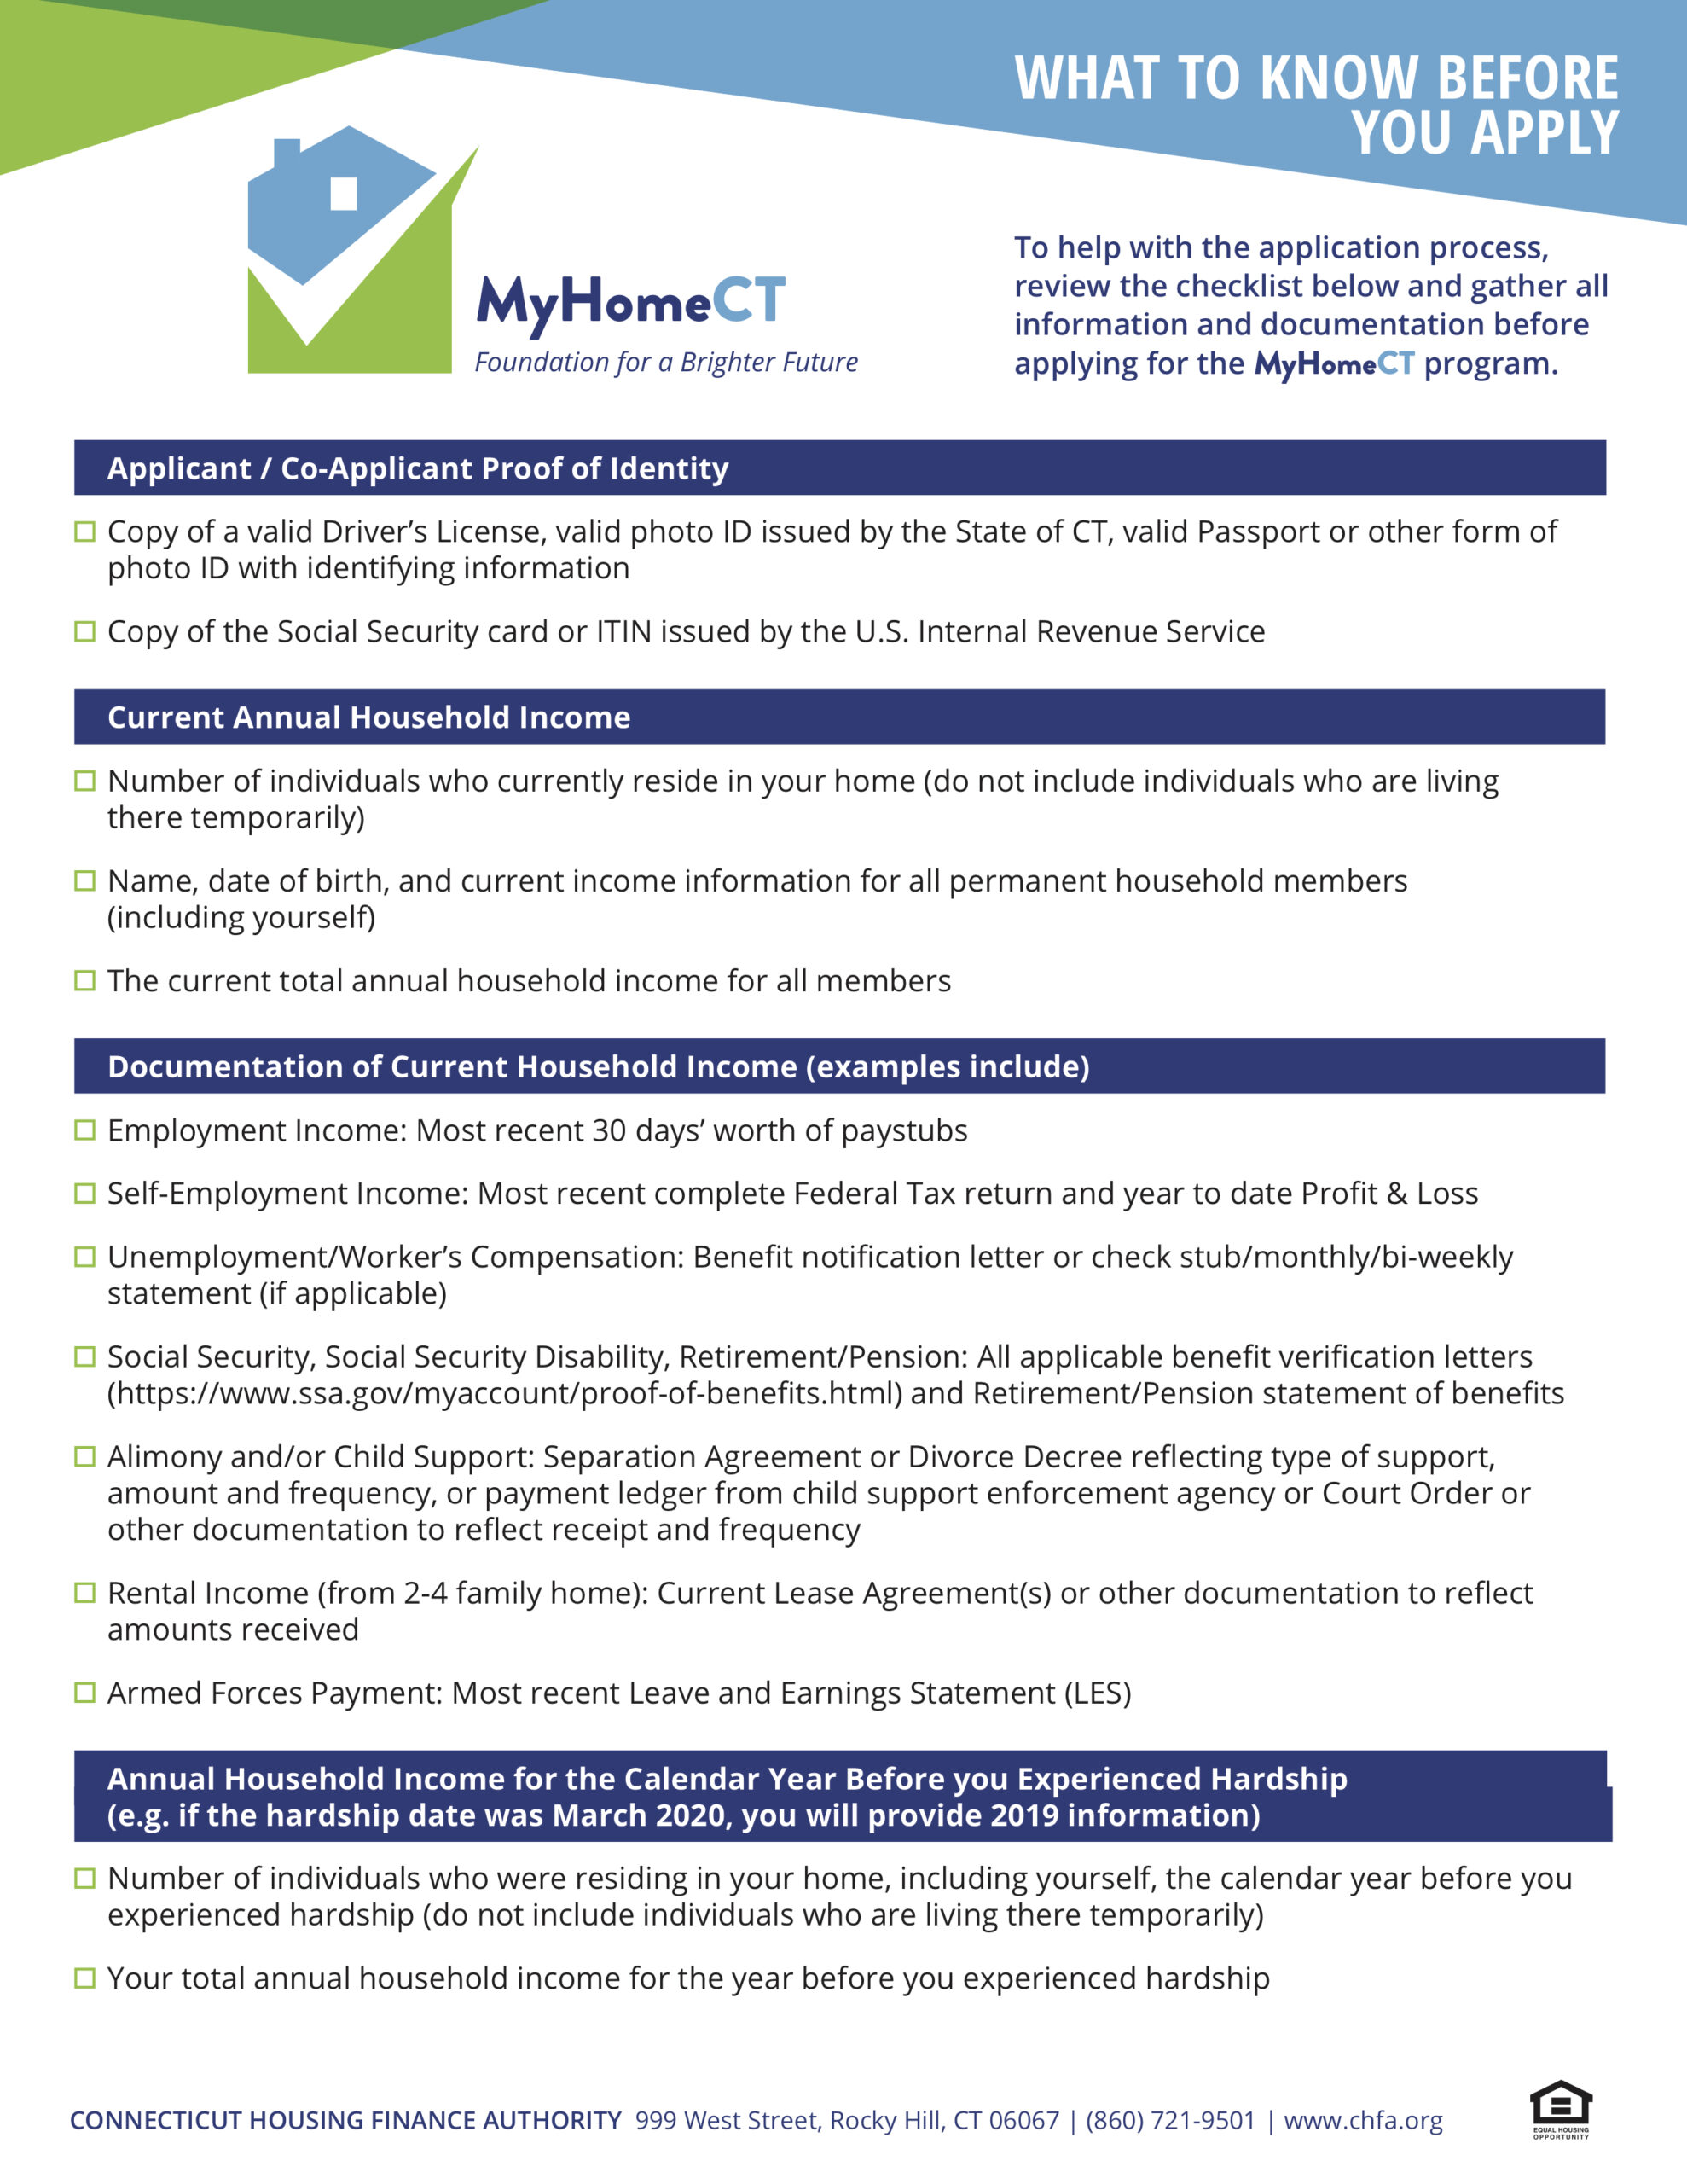 MyHomeCT Checklist